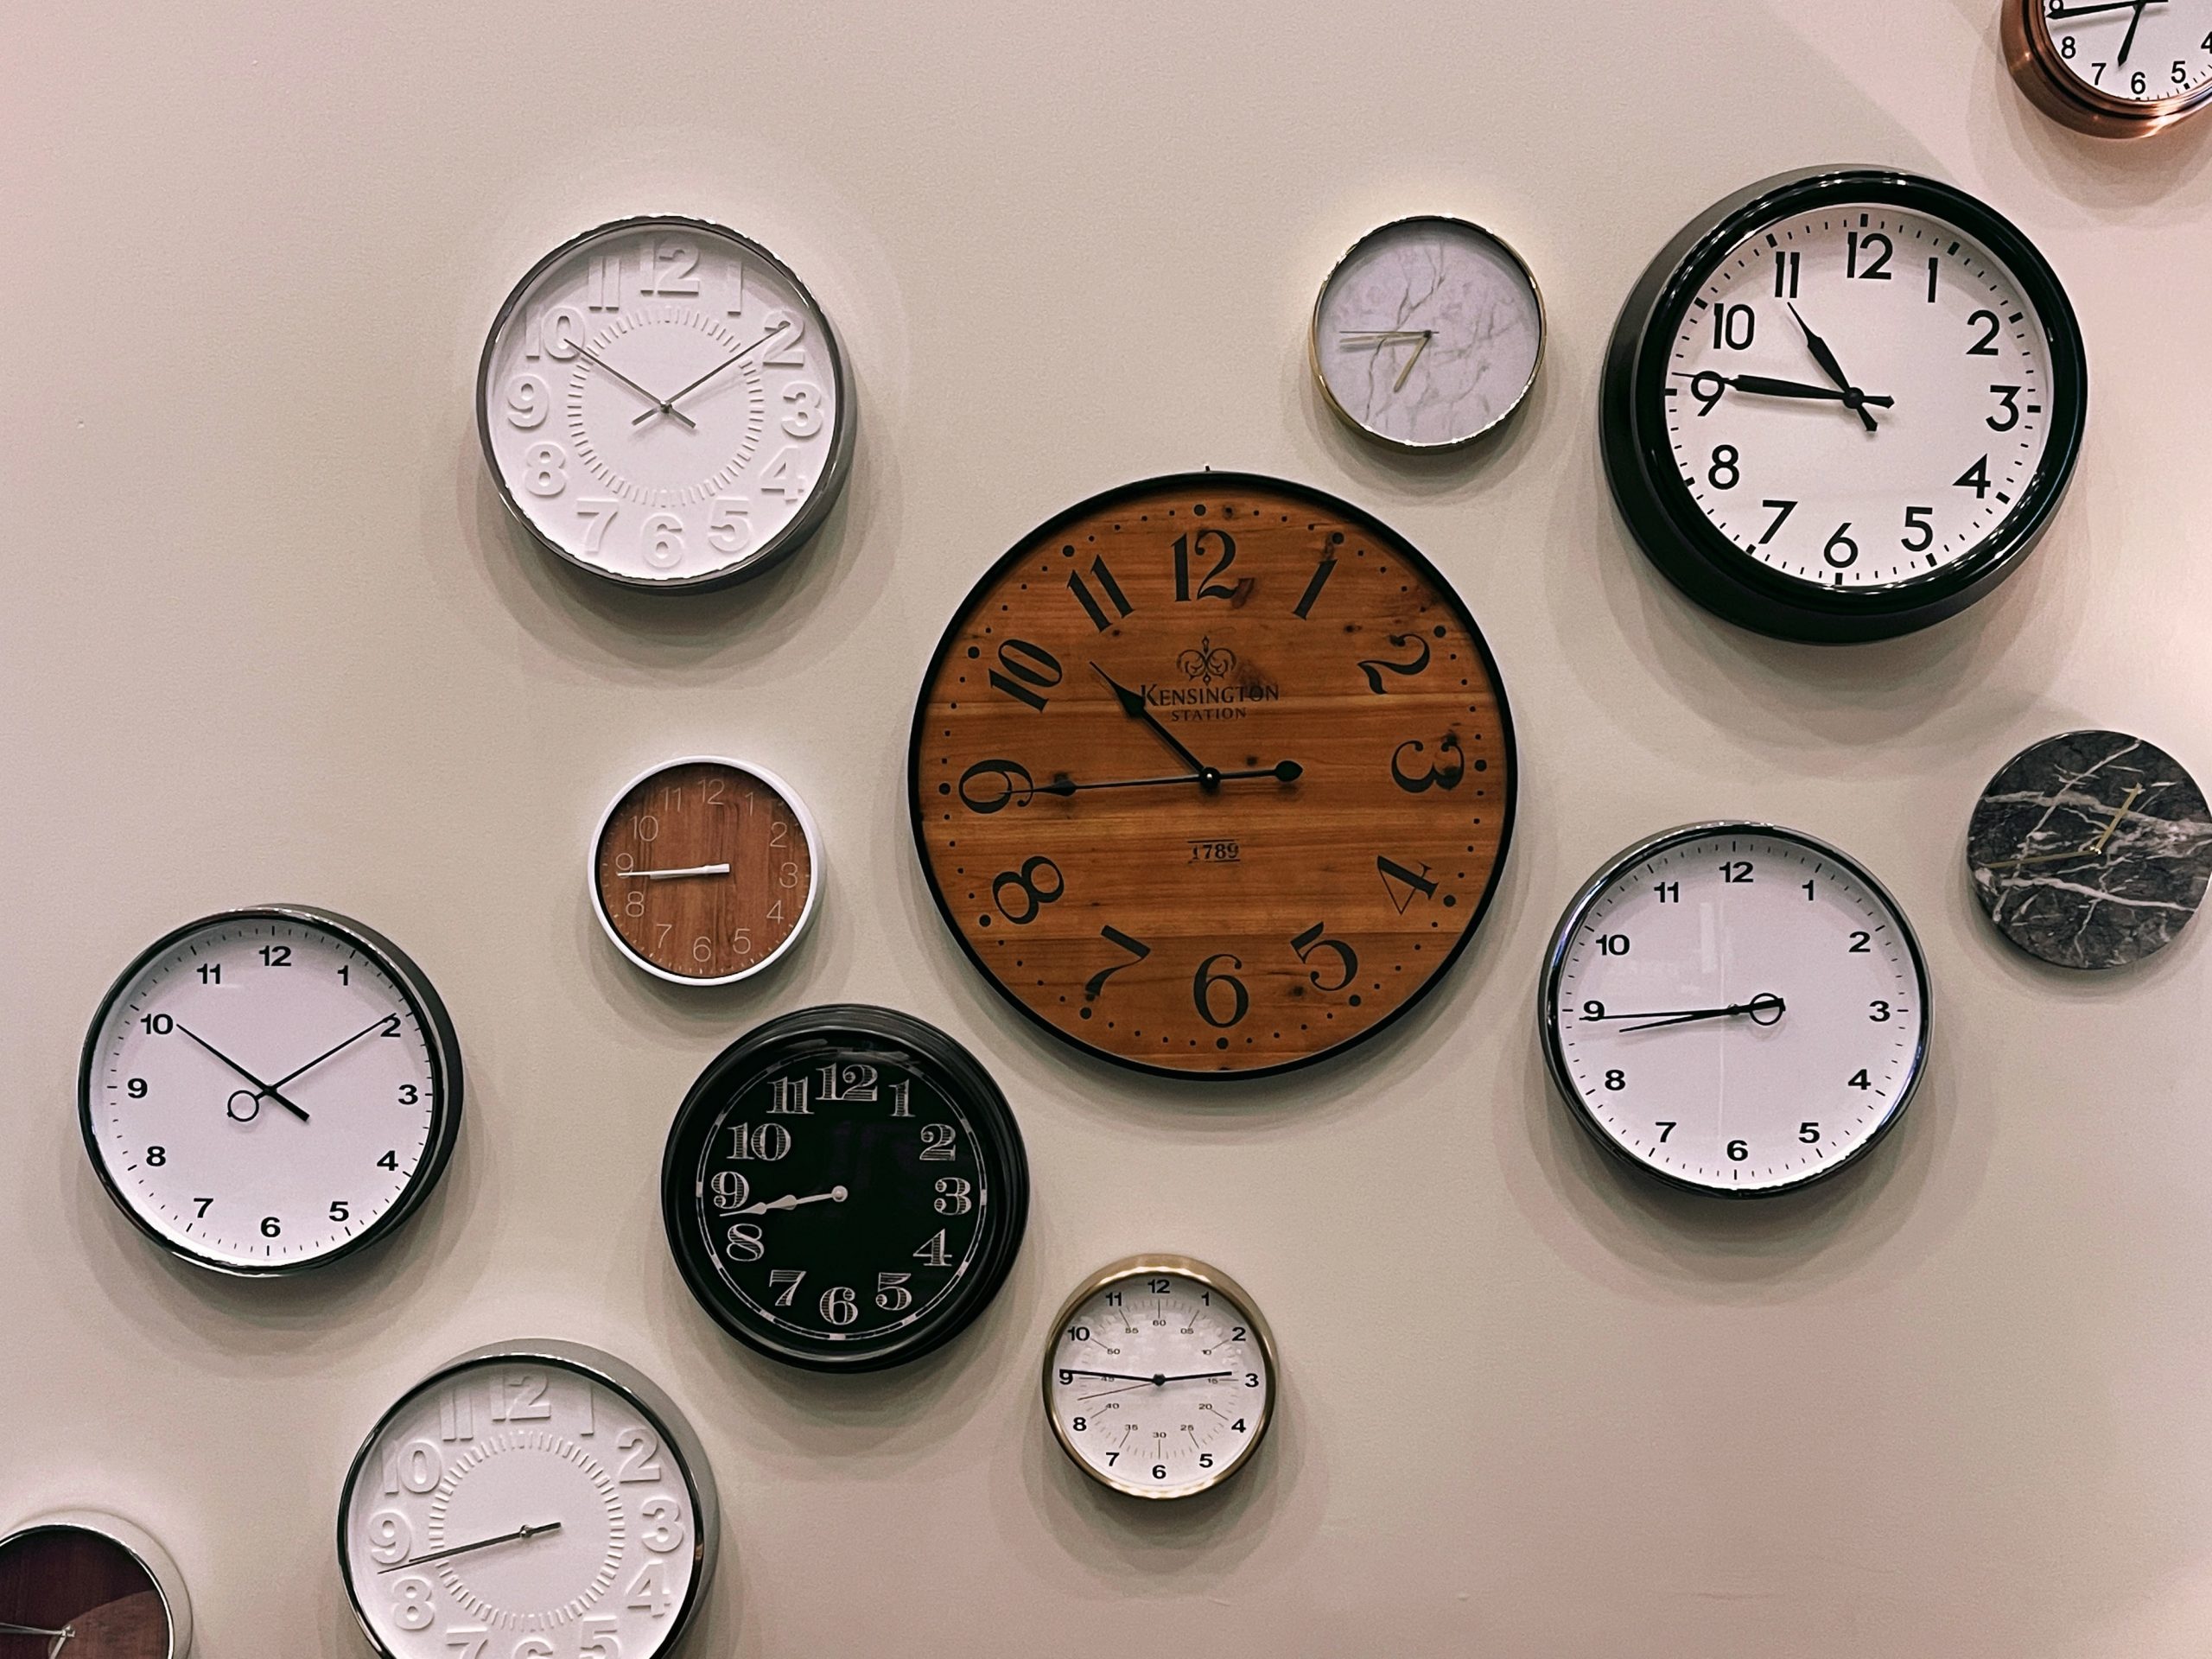 A variety of analog clocks